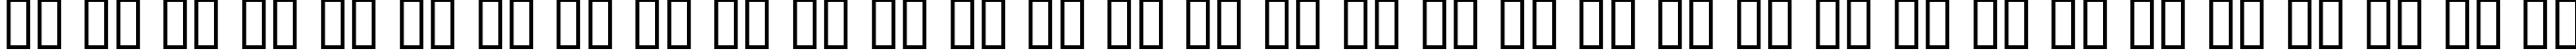 Пример написания русского алфавита шрифтом Niew CroMagnon Callig